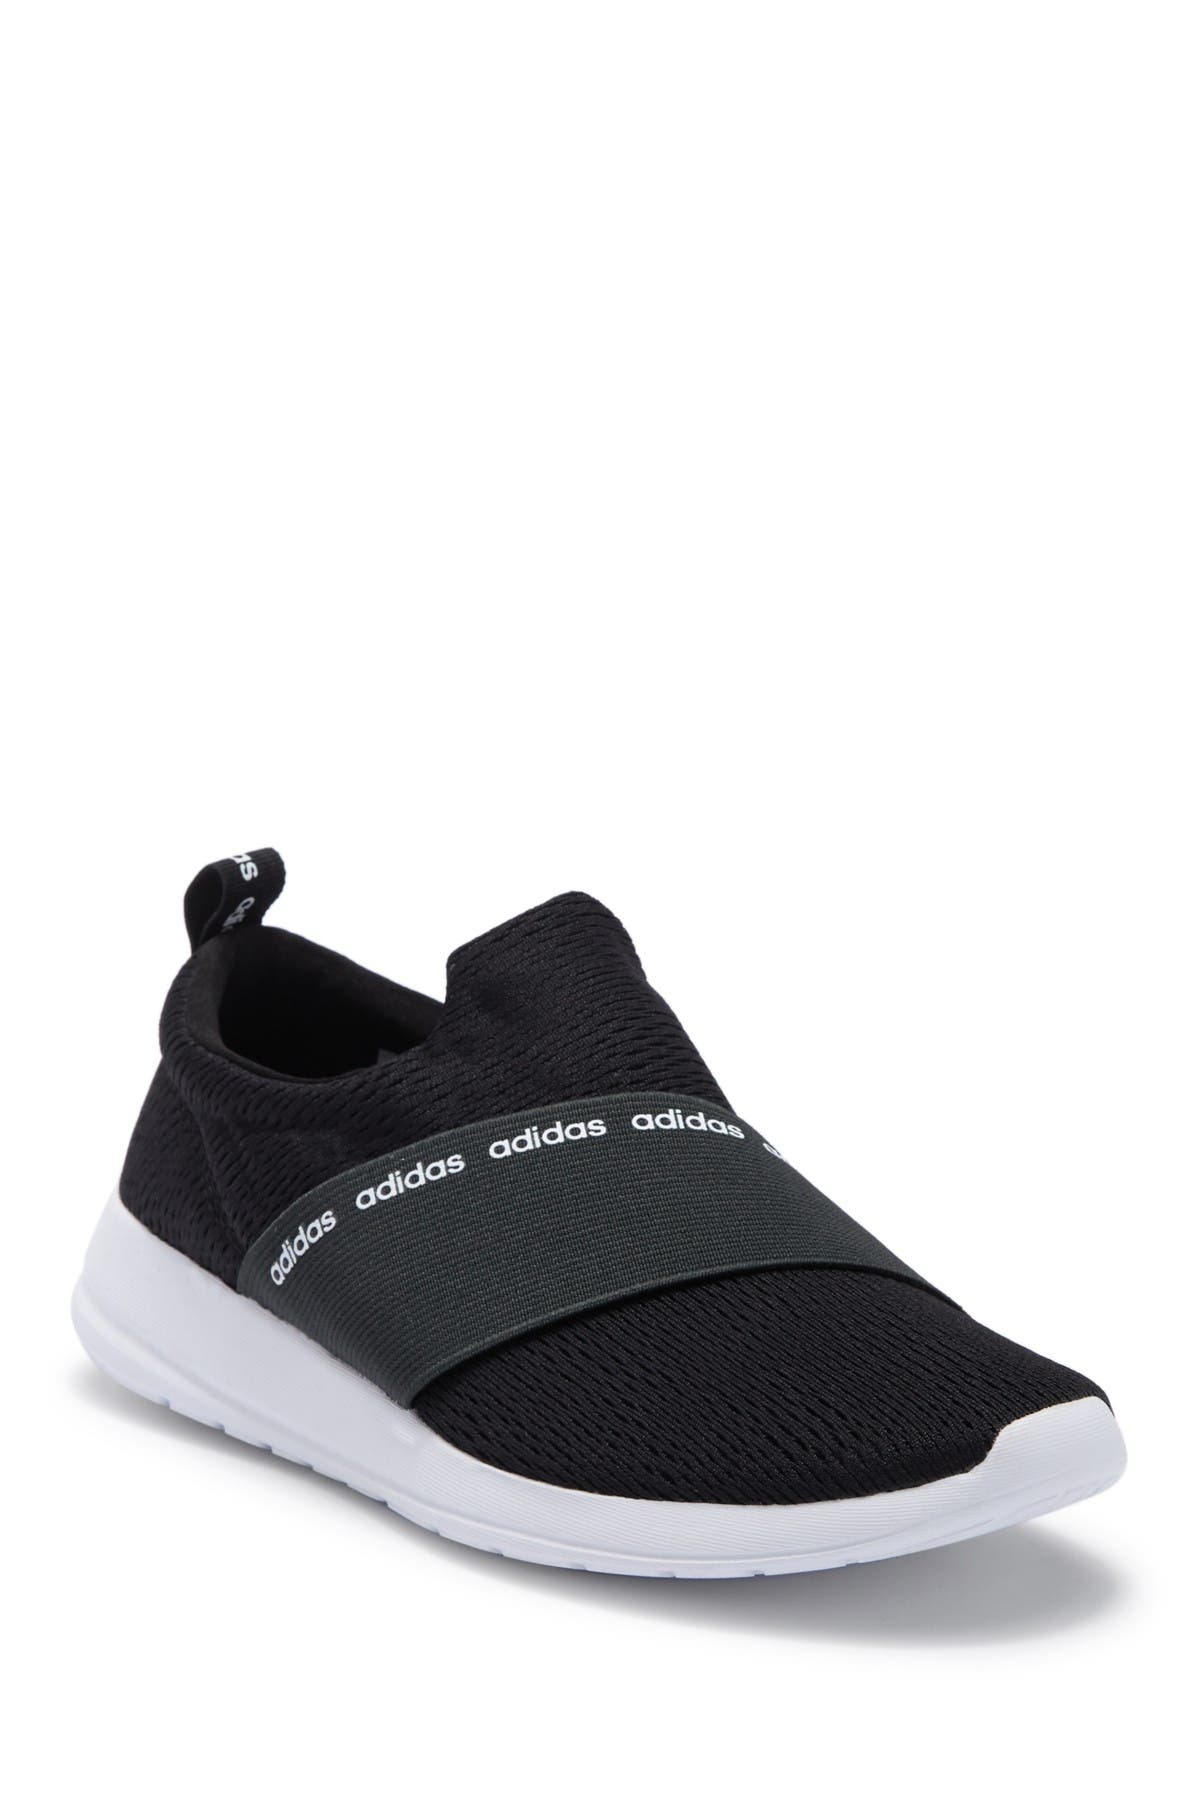 adidas | CloudFoam Refine Adapt Sneaker 